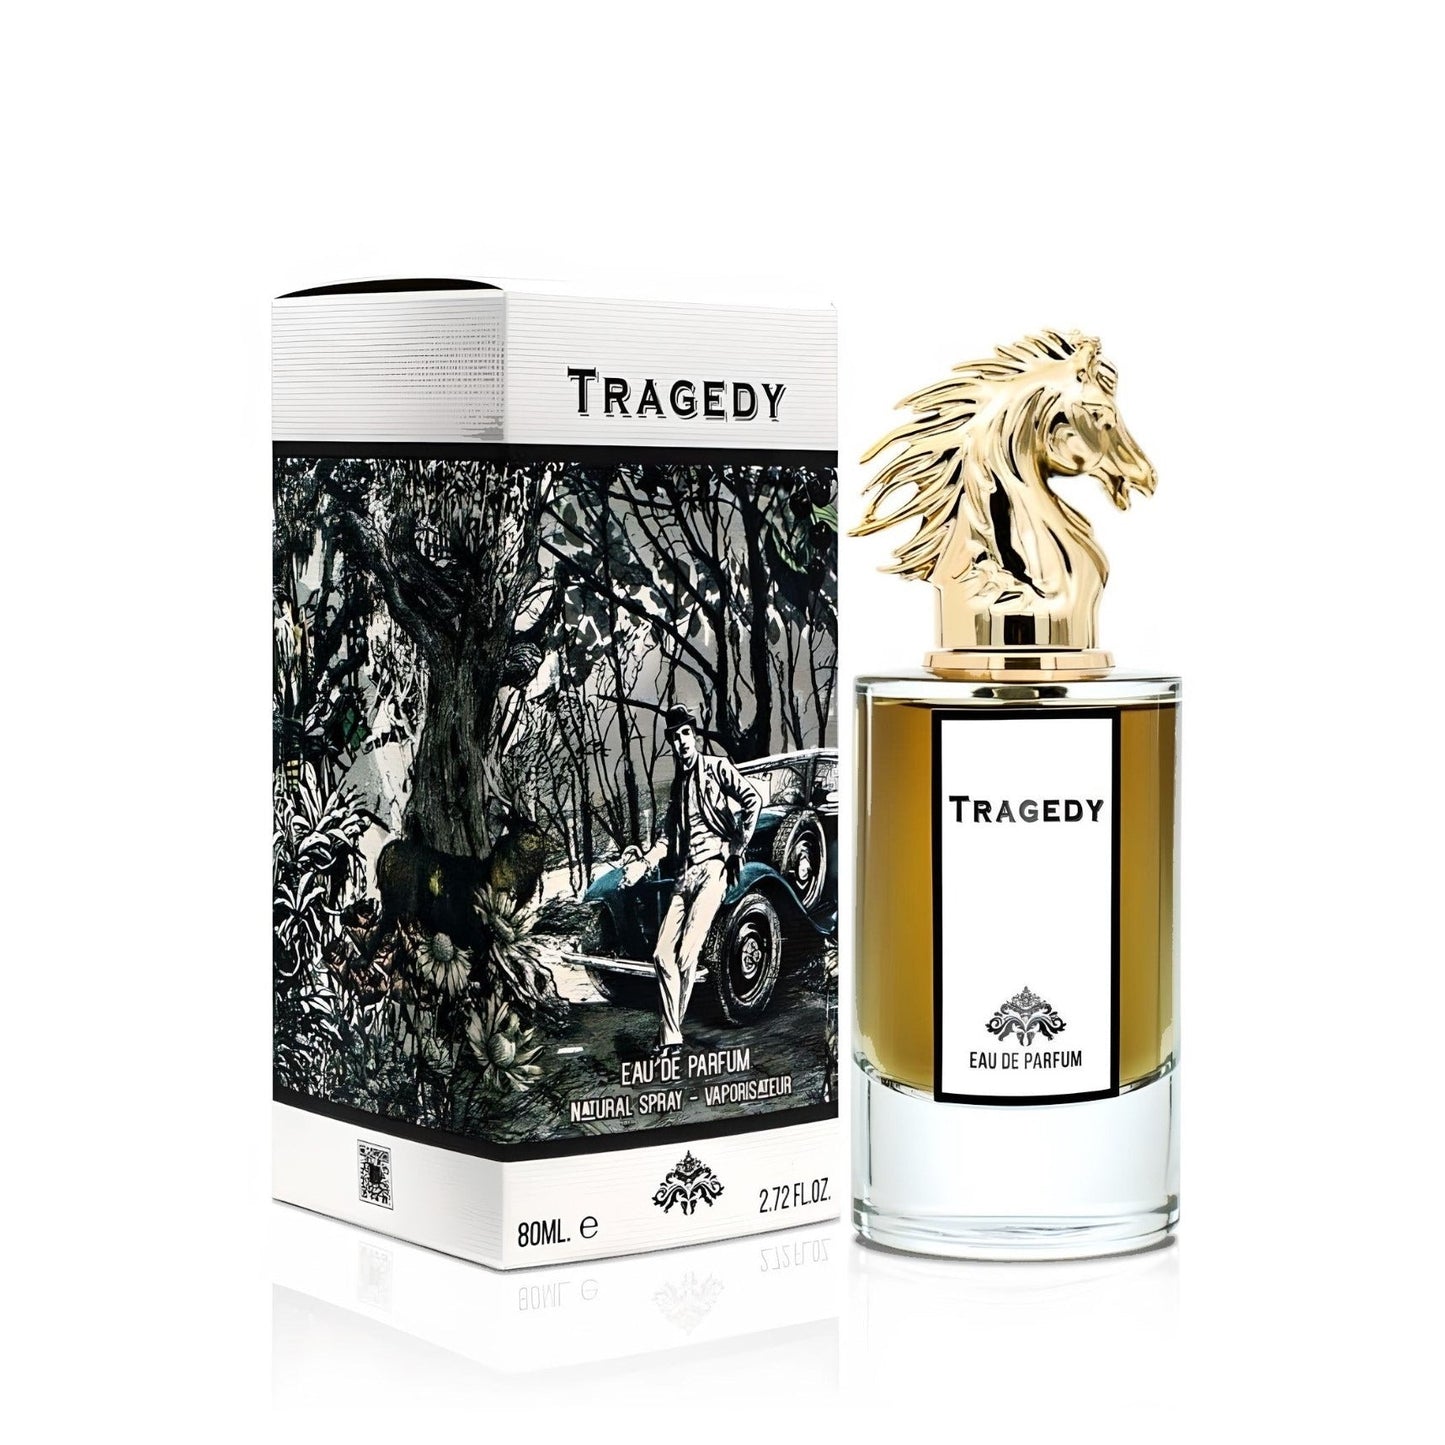 Tragedy EAU de Parfum 100ml Fragrance World-Perfume Heaven